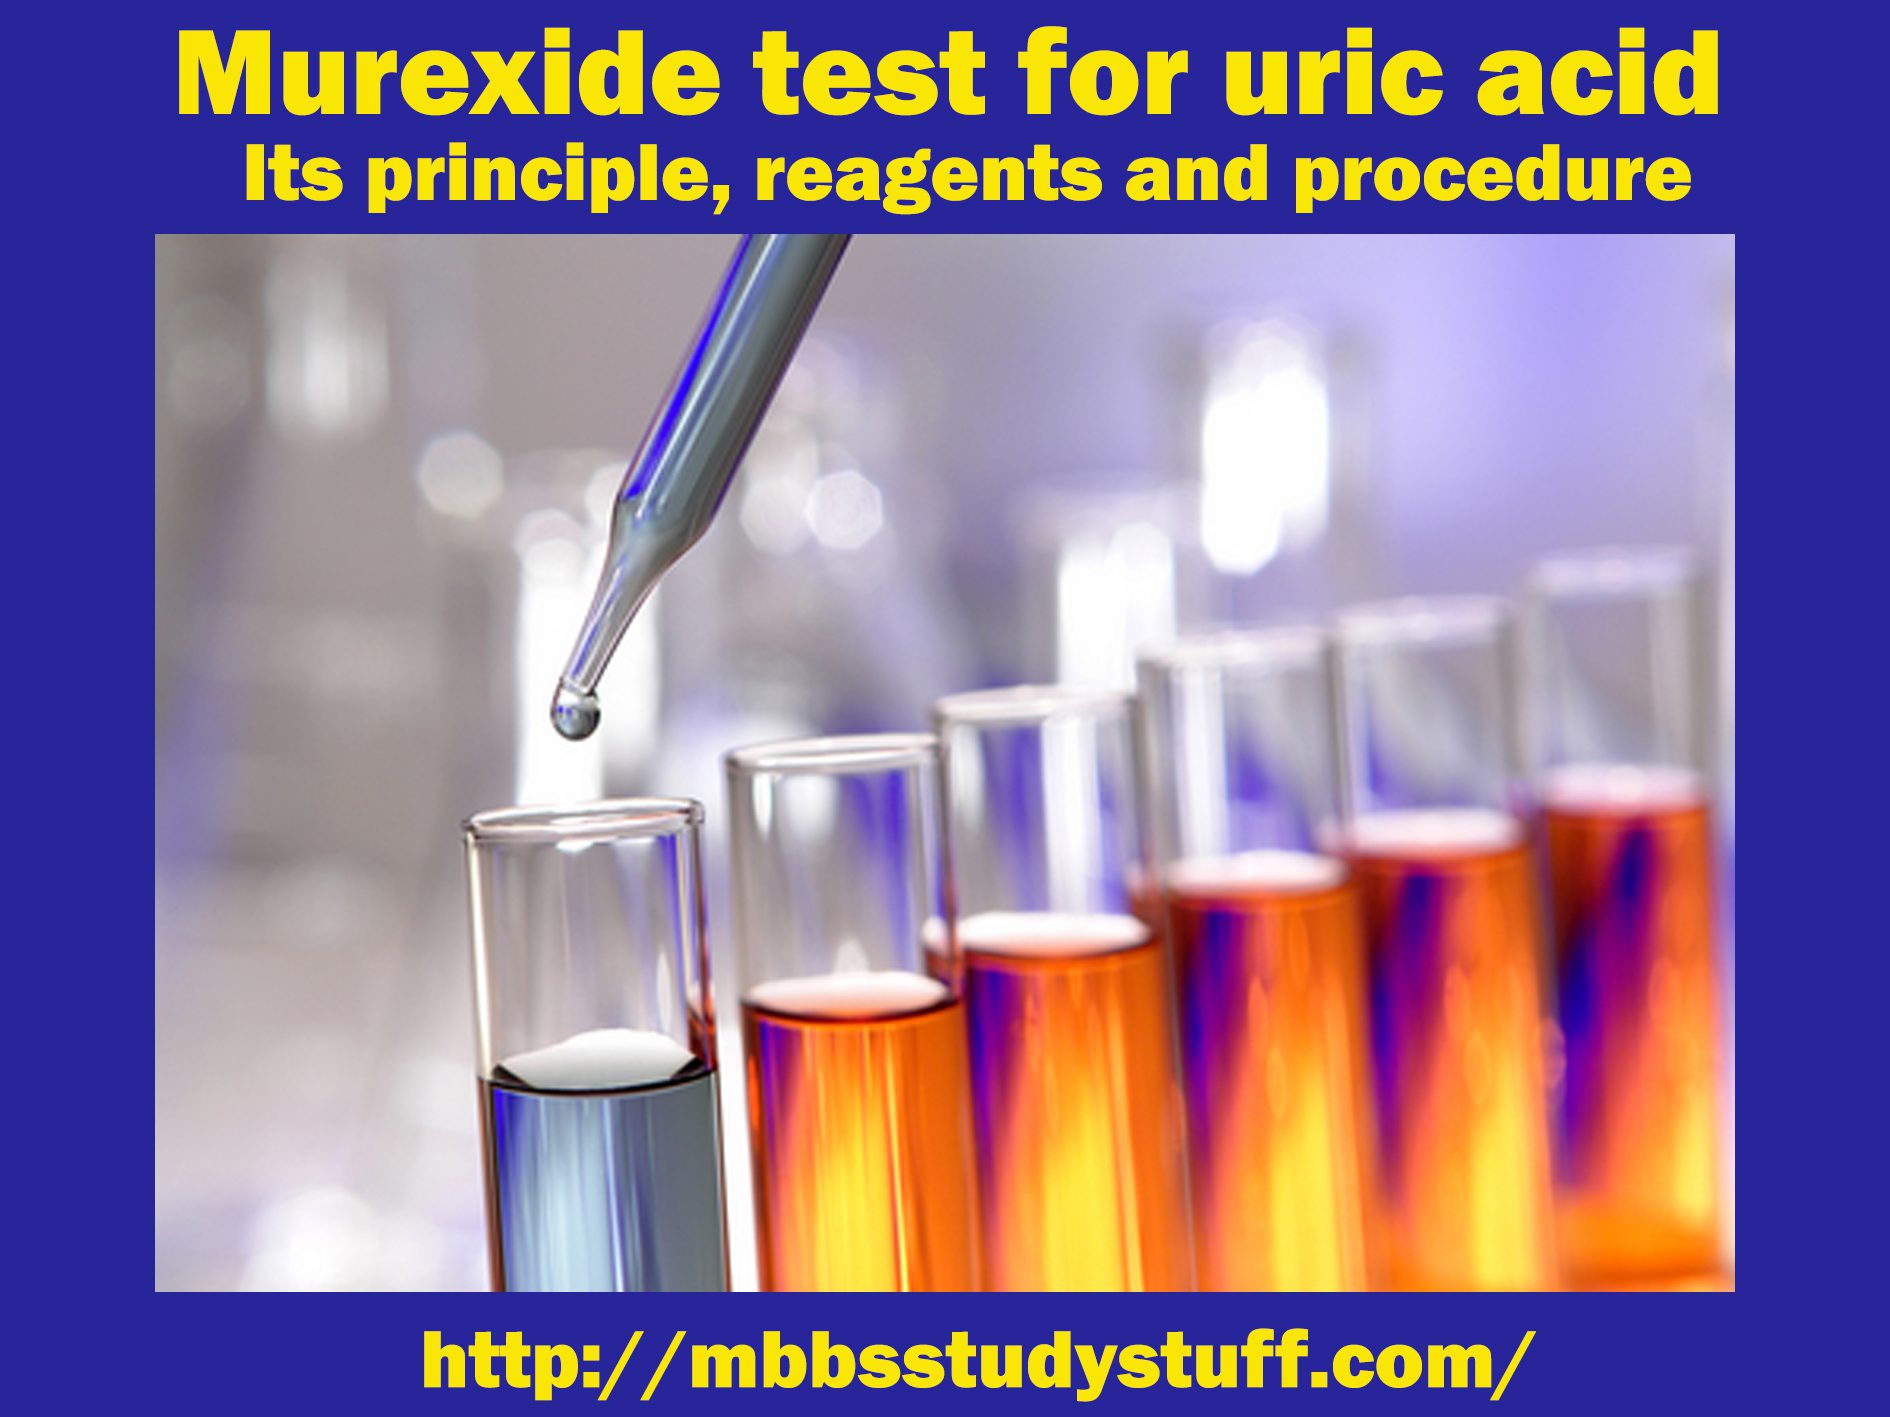 Murexide test for uric acid - Its principle, reagents and procedure